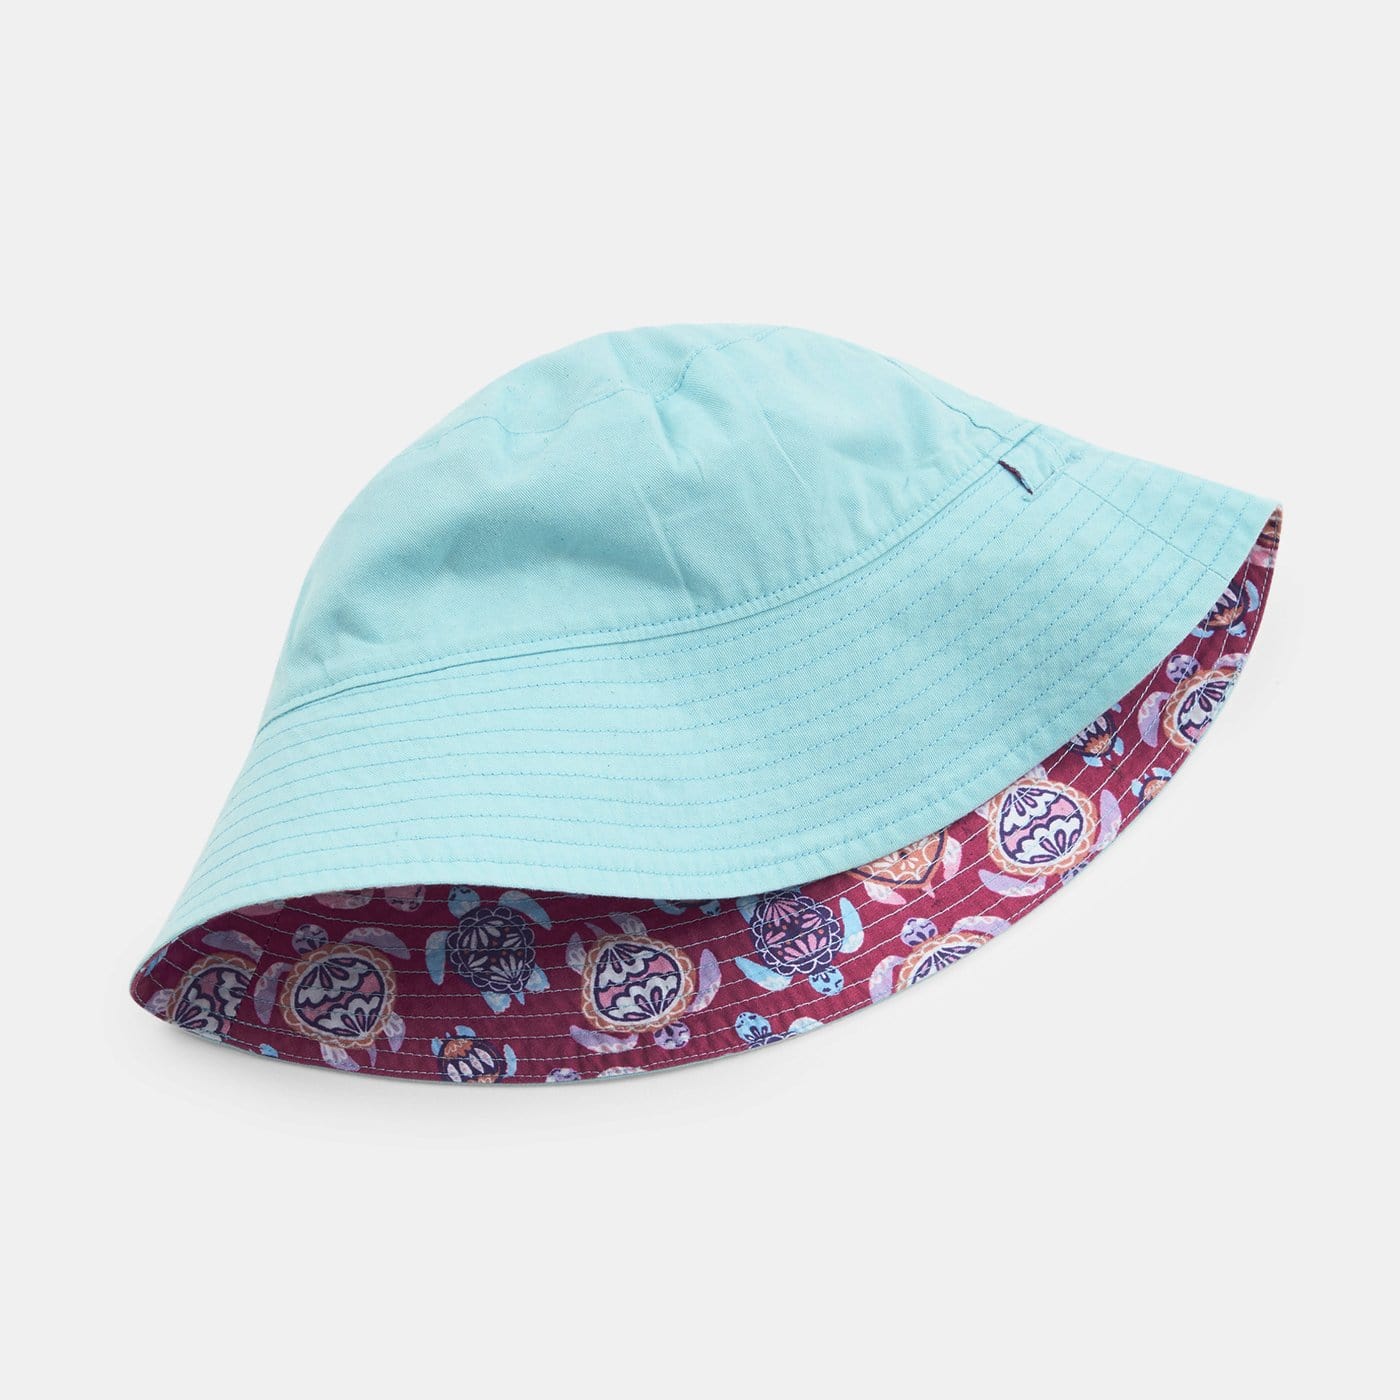 Hatley ’Pretty Sea Turtles’ Sun Hat - Hat